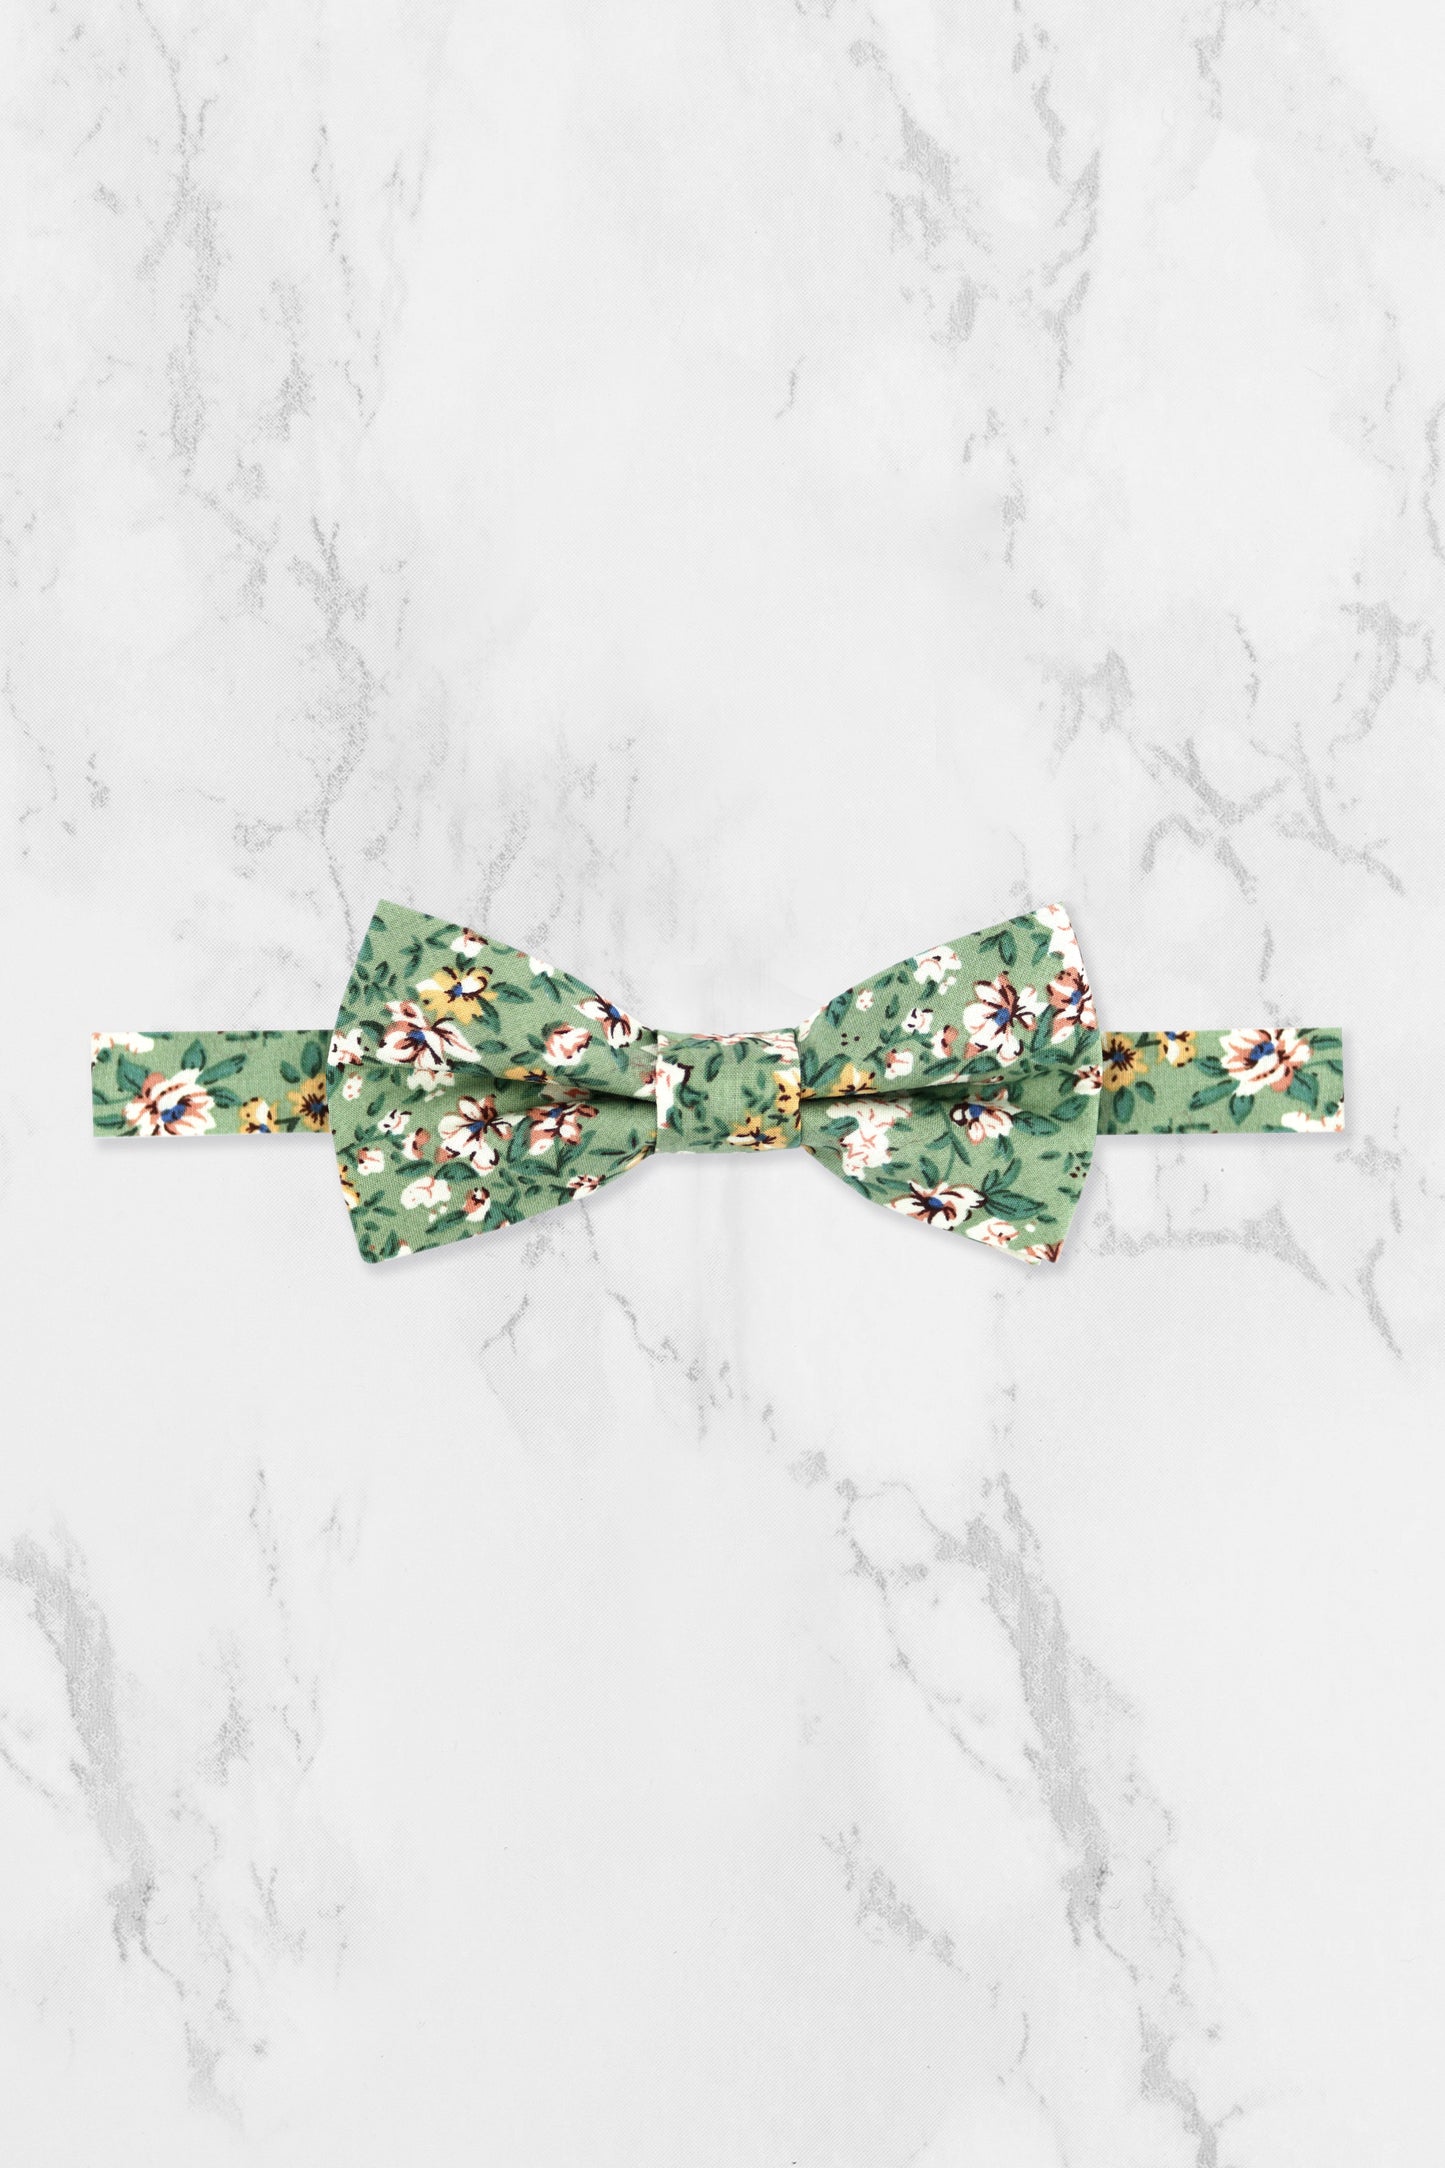 100% Cotton Floral Print Tie - Sage Green